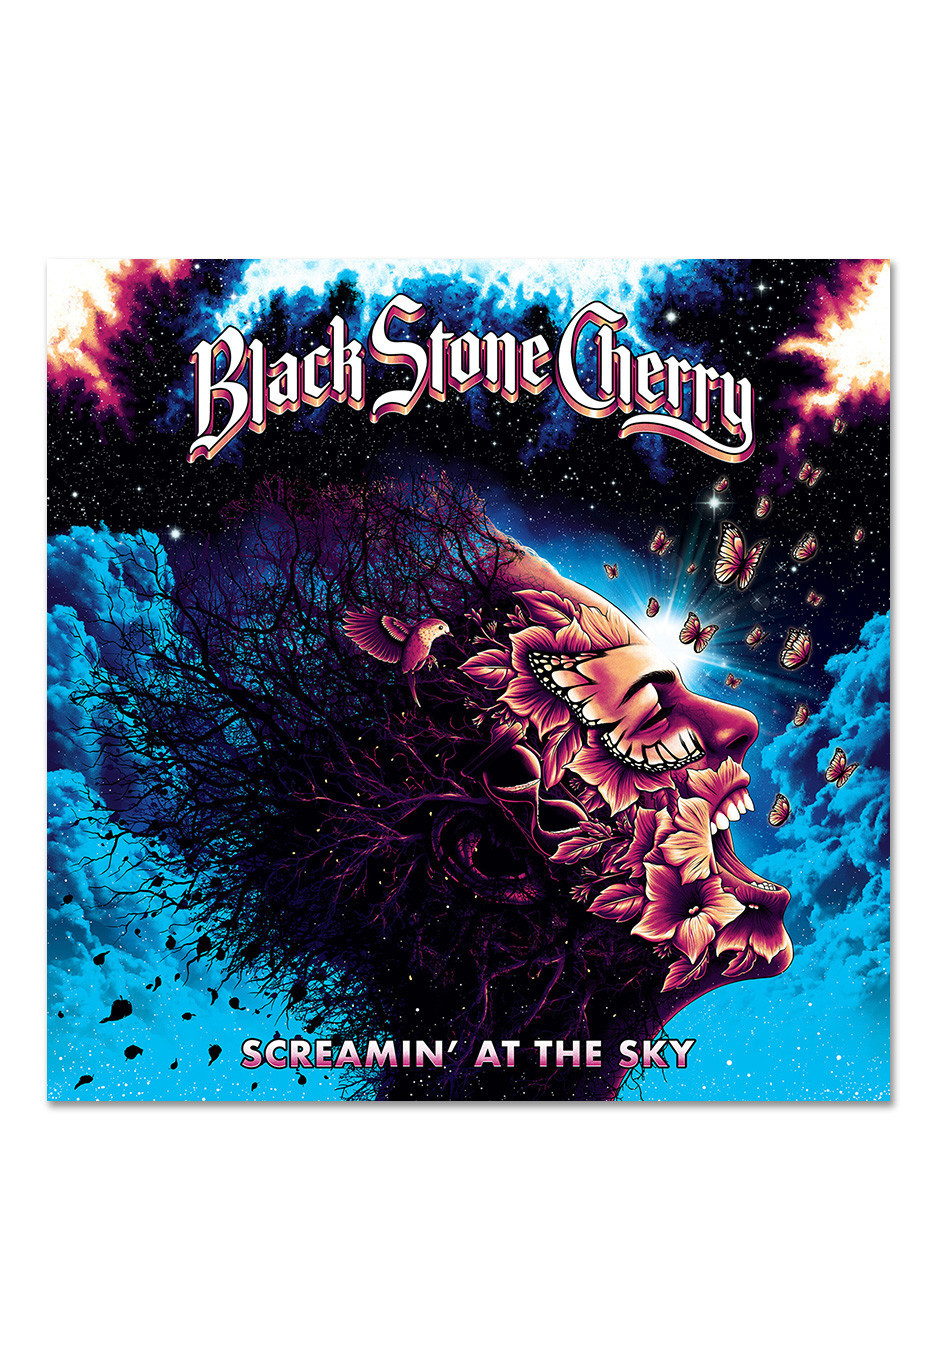 Black Stone Cherry - Screamin' At The Sky Ltd. Solid White - Vinyl